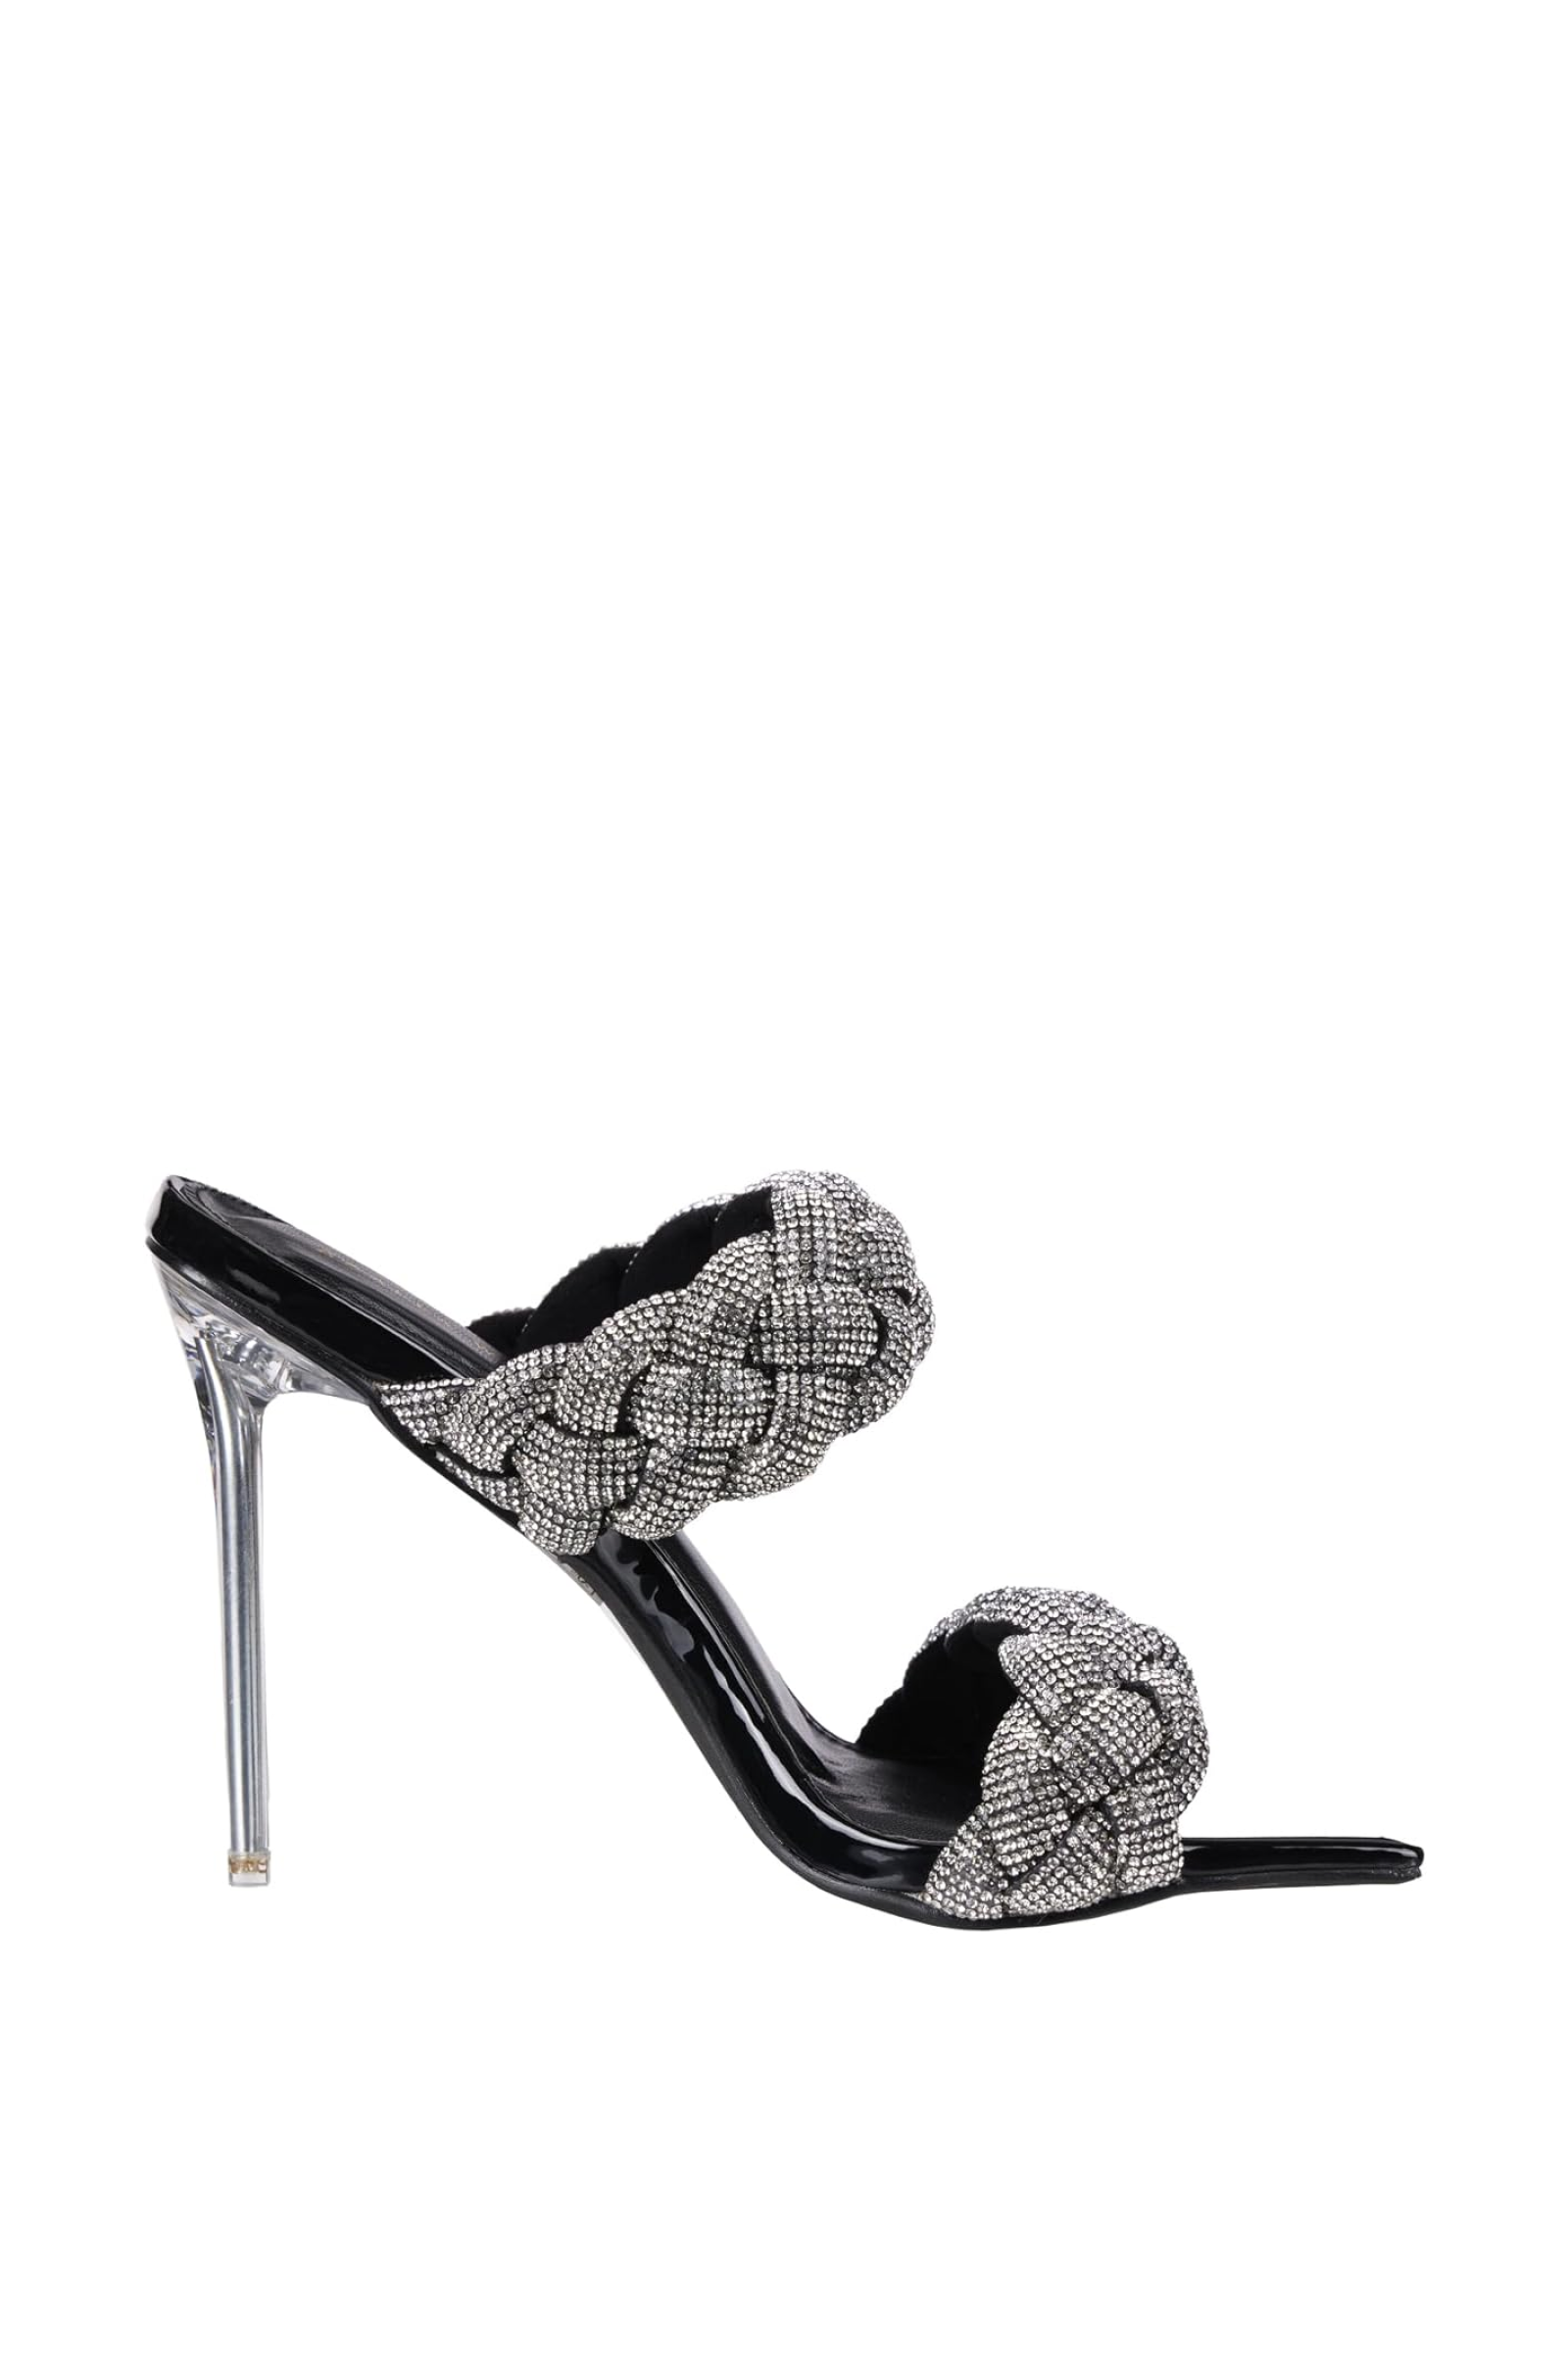 GRACE Black Crystal Braided Sandal & Clear Stiletto Heel | AZALEA WANG ...